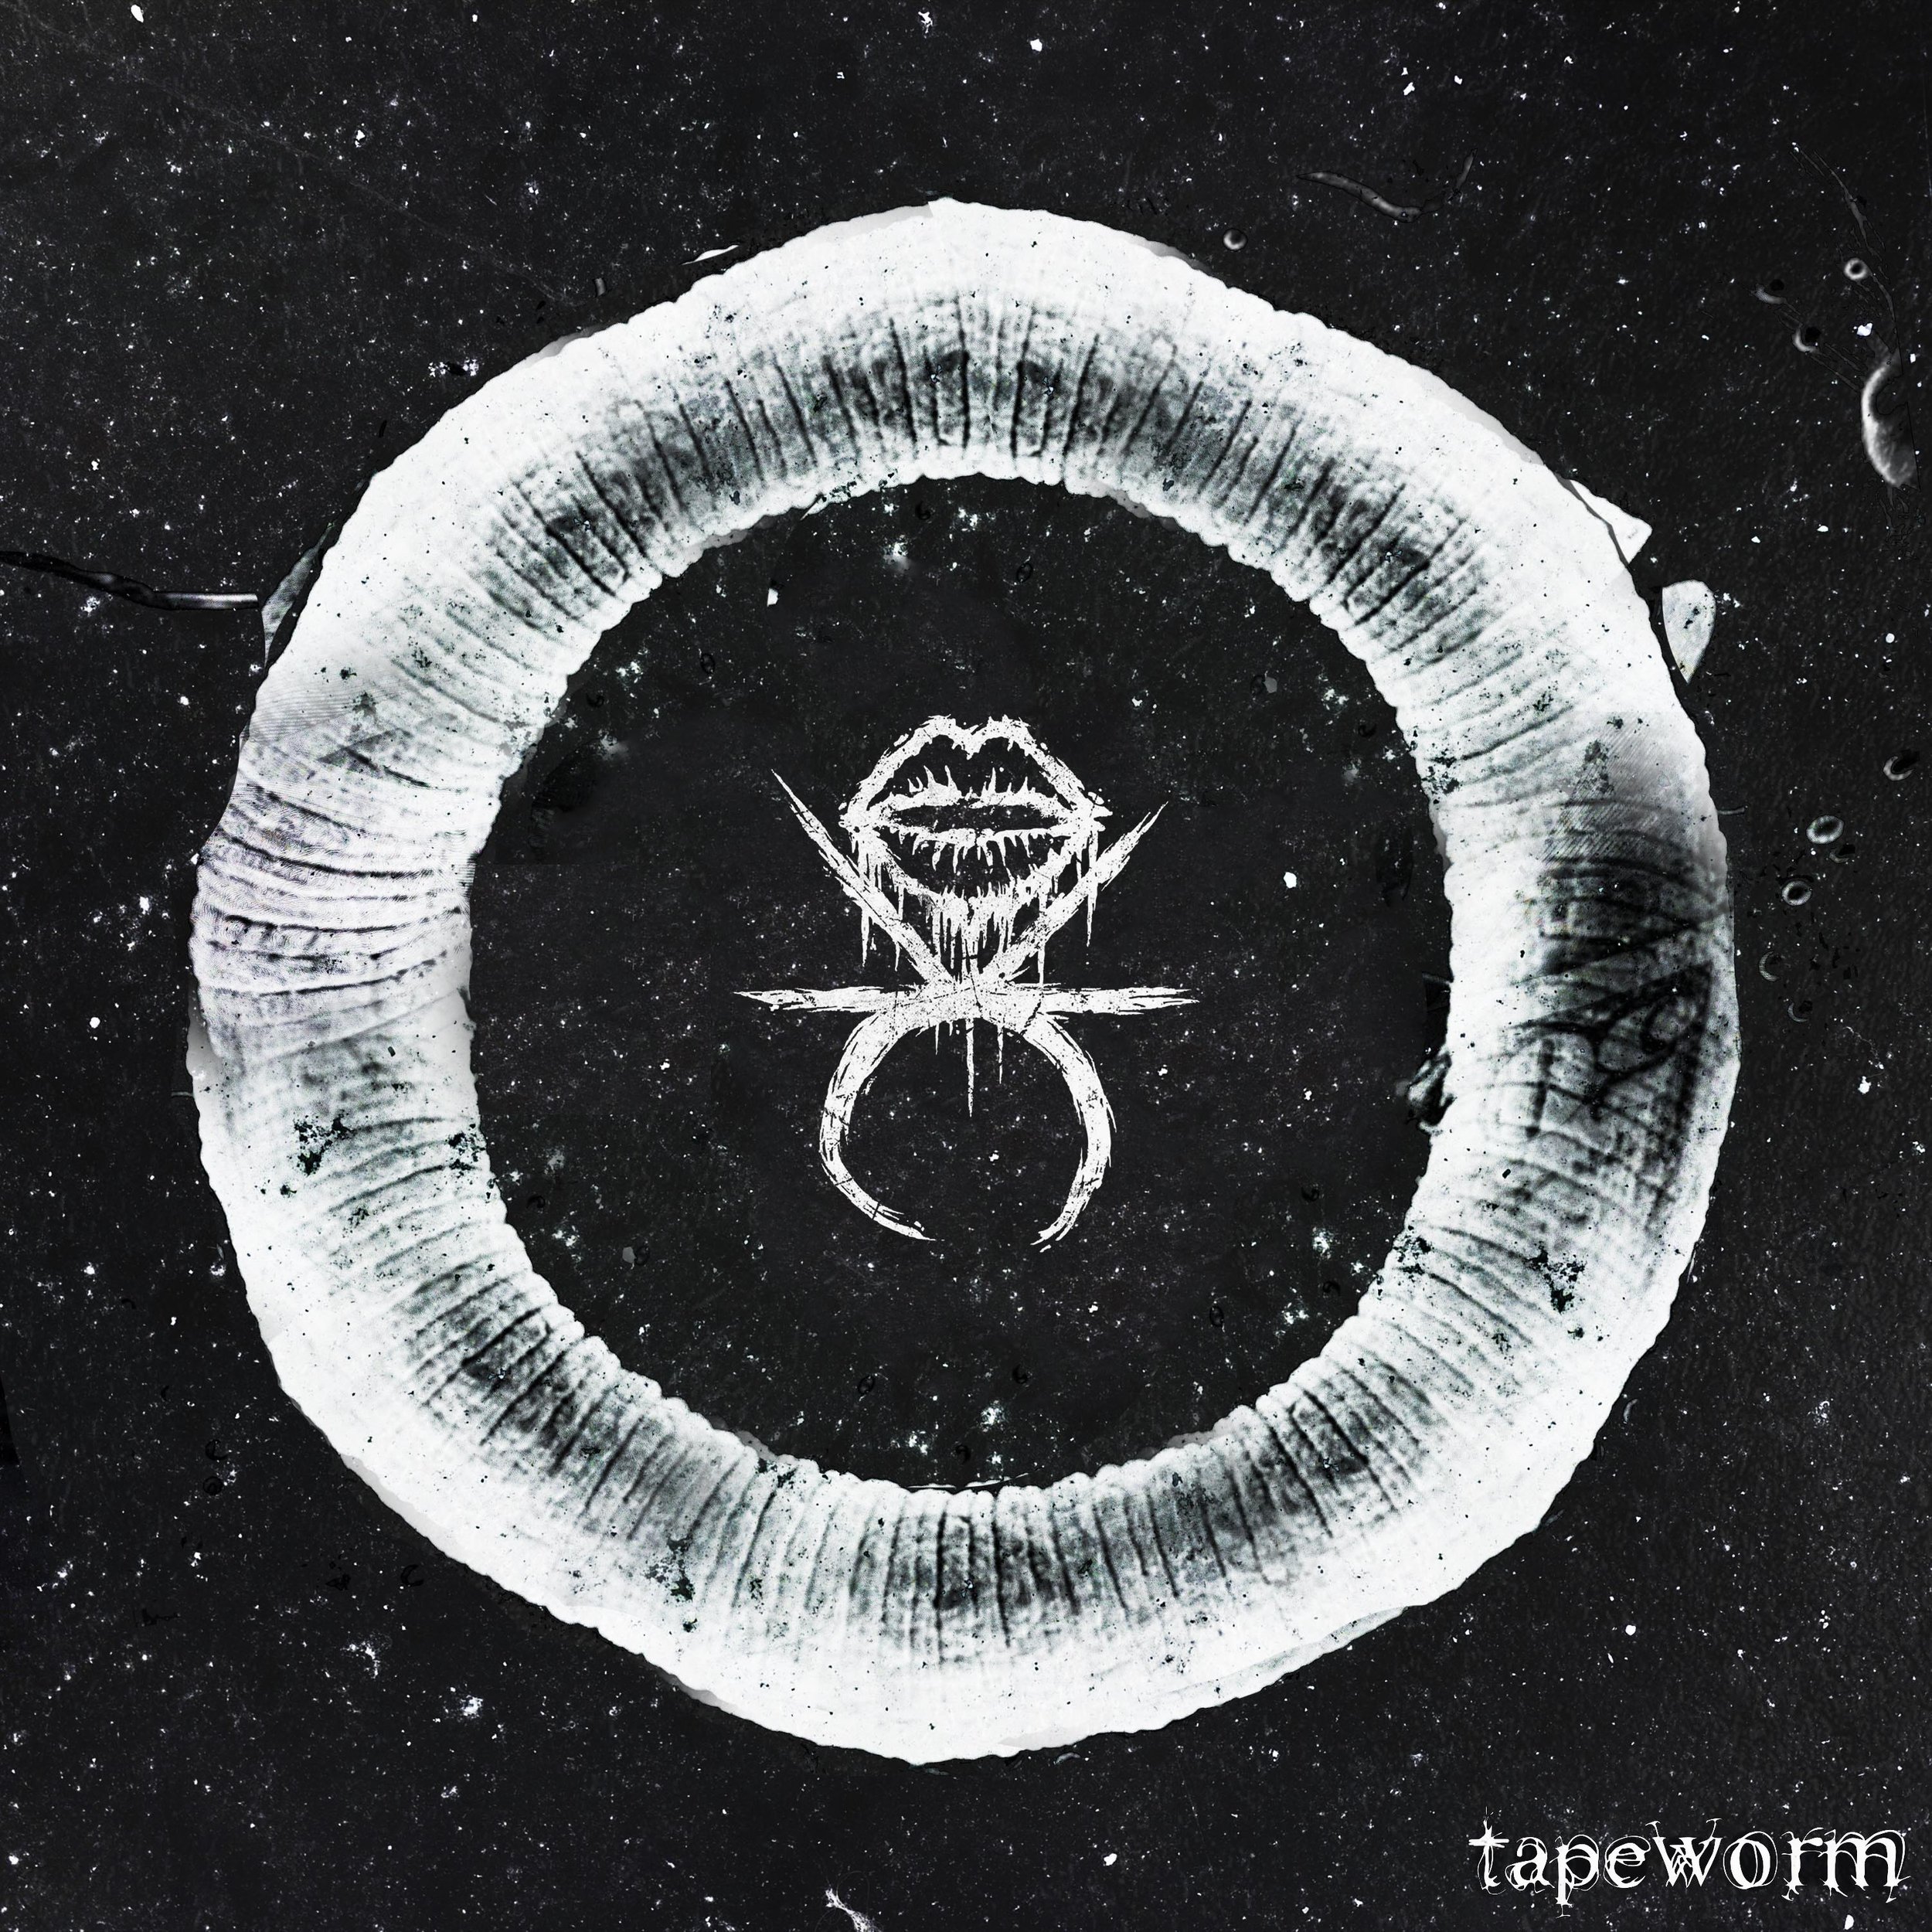 Tapeworm (2020)